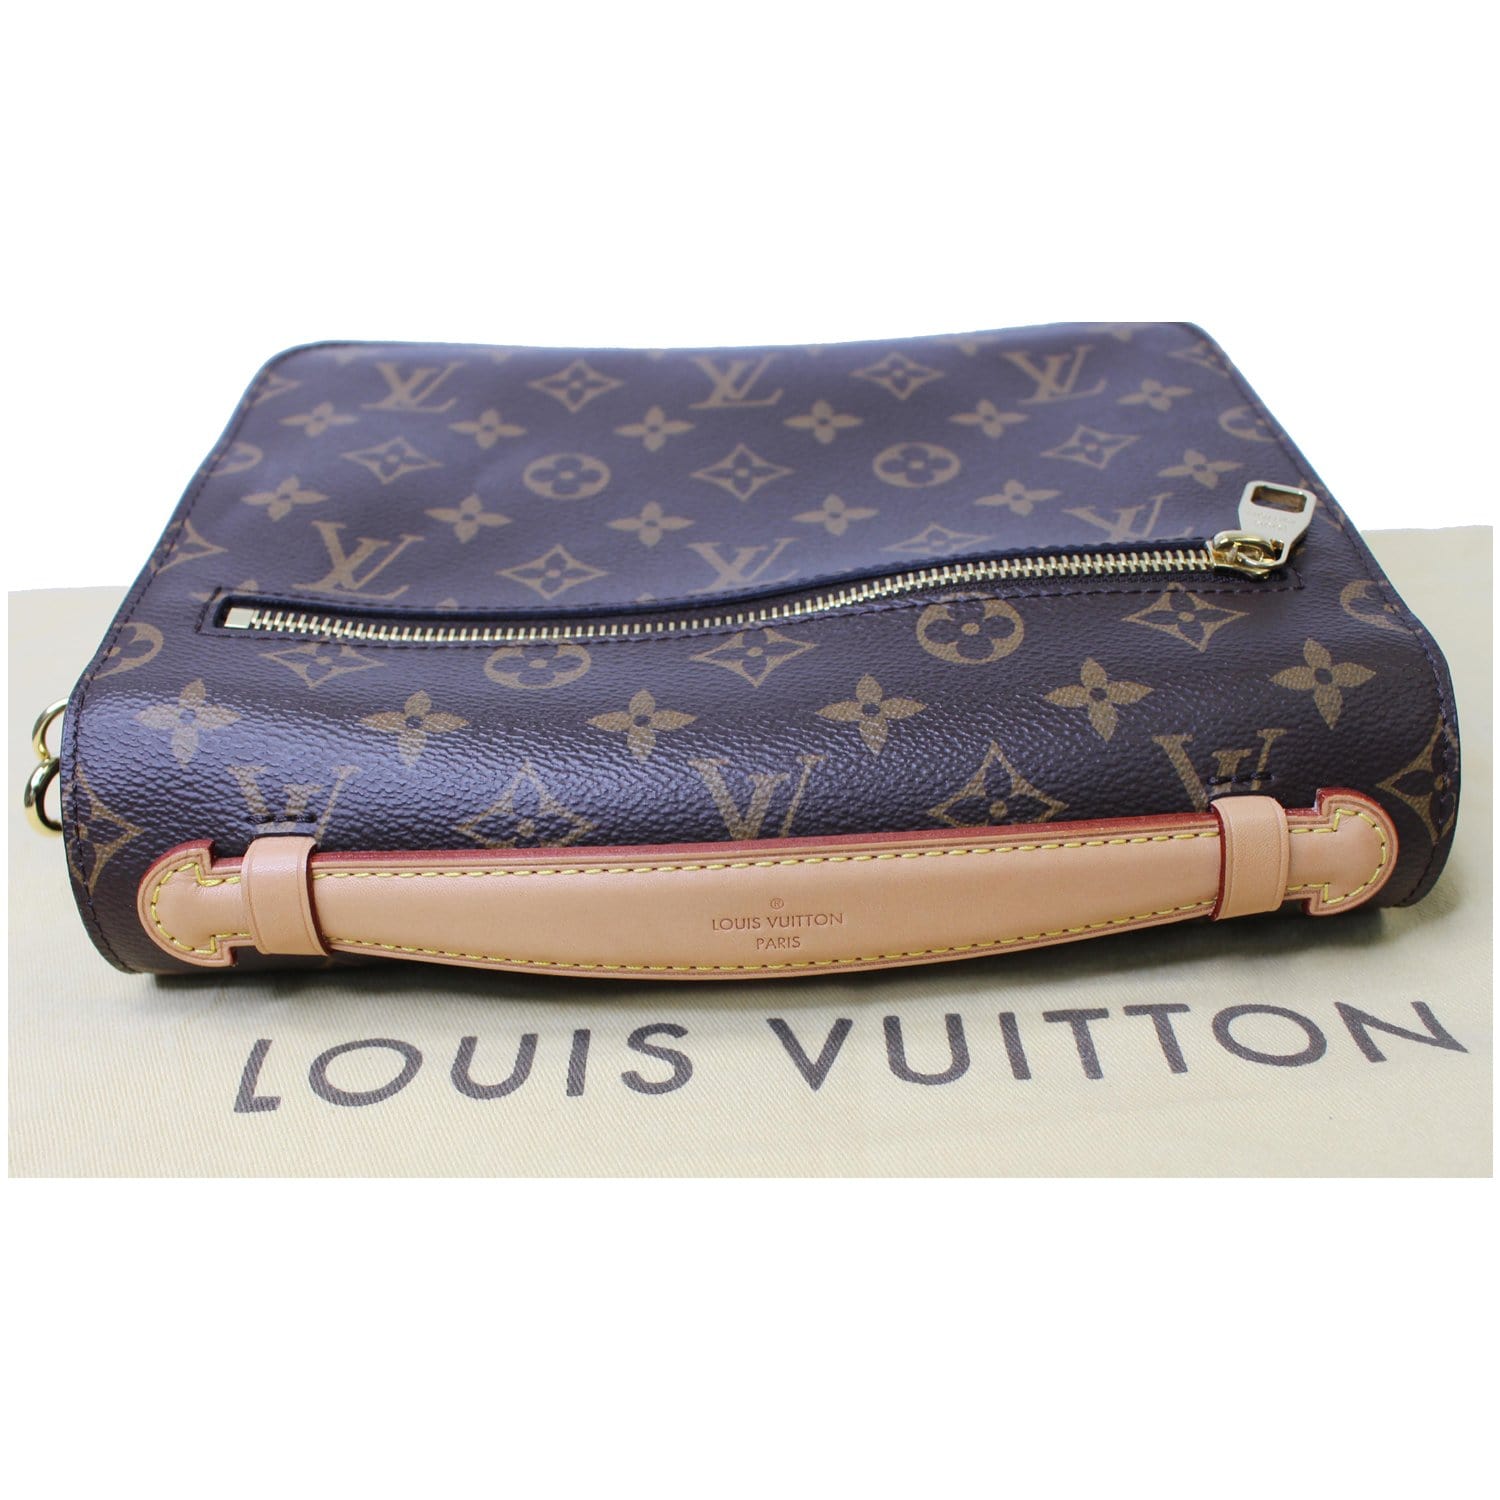 Louis vuitton metis handbag  Fashion bags, Bags, Lv handbags